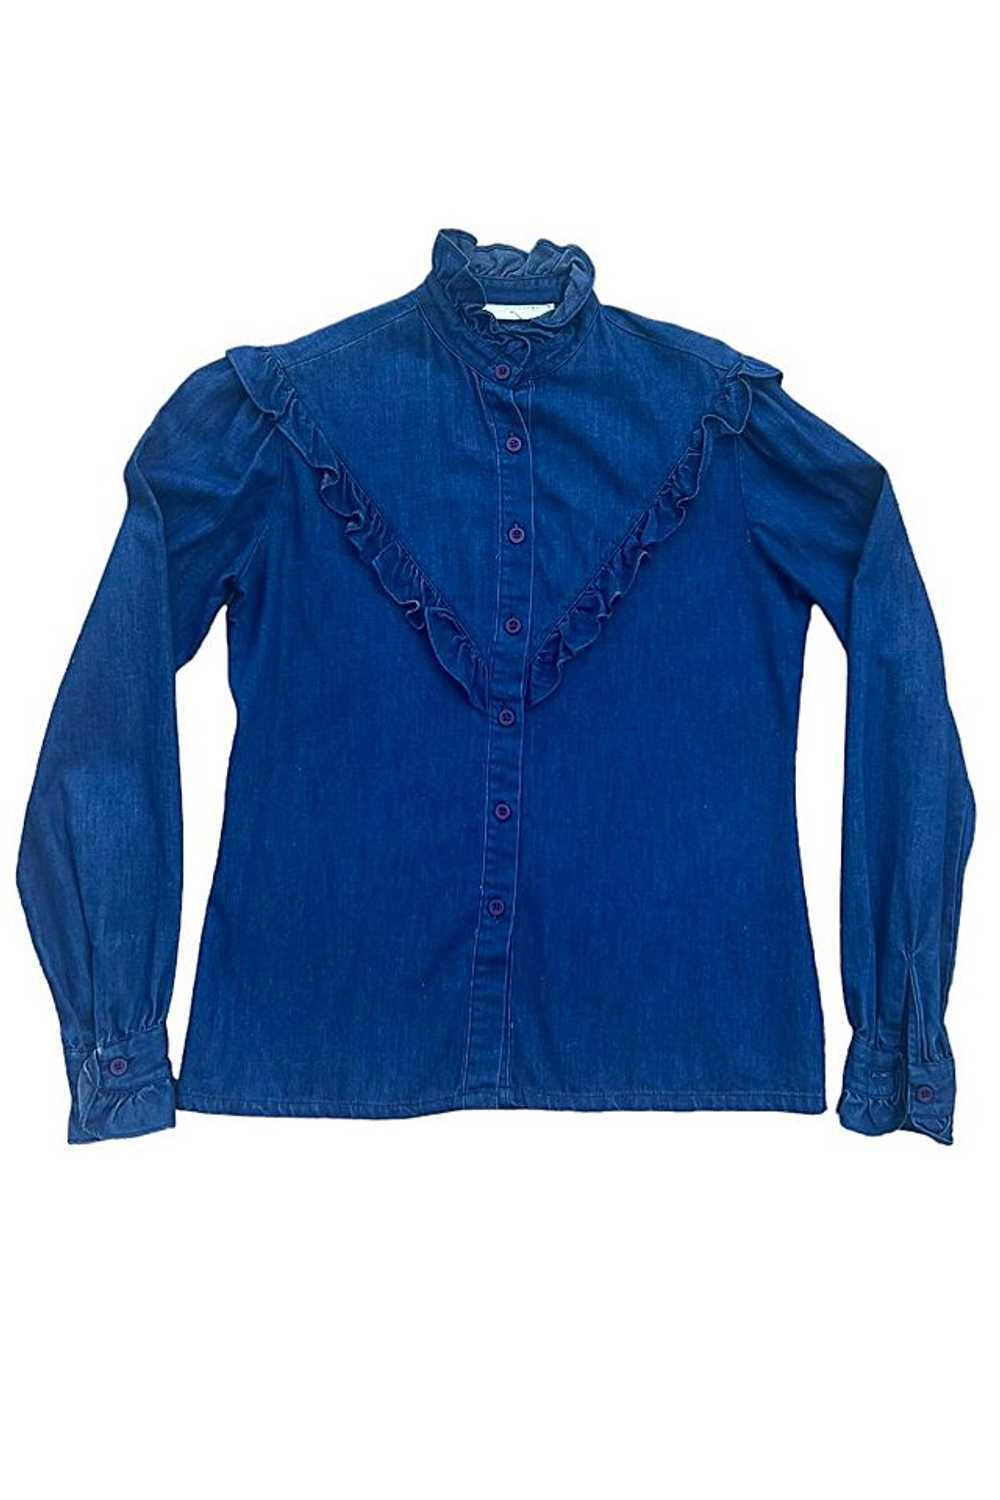 Vintage 1980s Geoffrey Beene Ruffled Jeans Shirt … - image 1